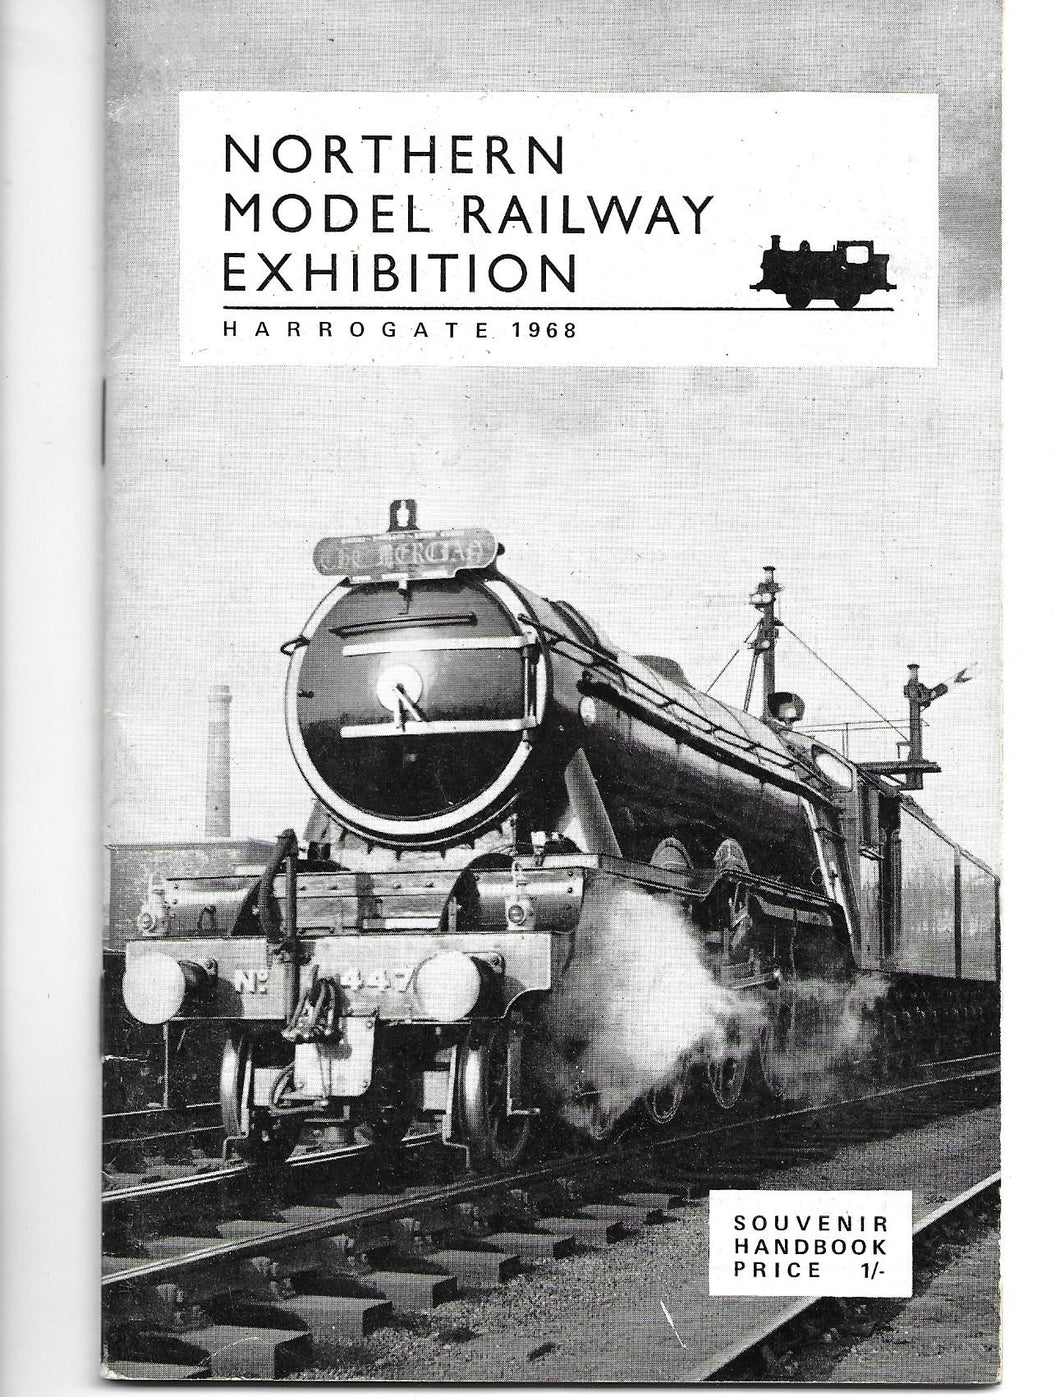 Northern Model Railway Exhibition, Harrogate 1968, Souvenir Handbook